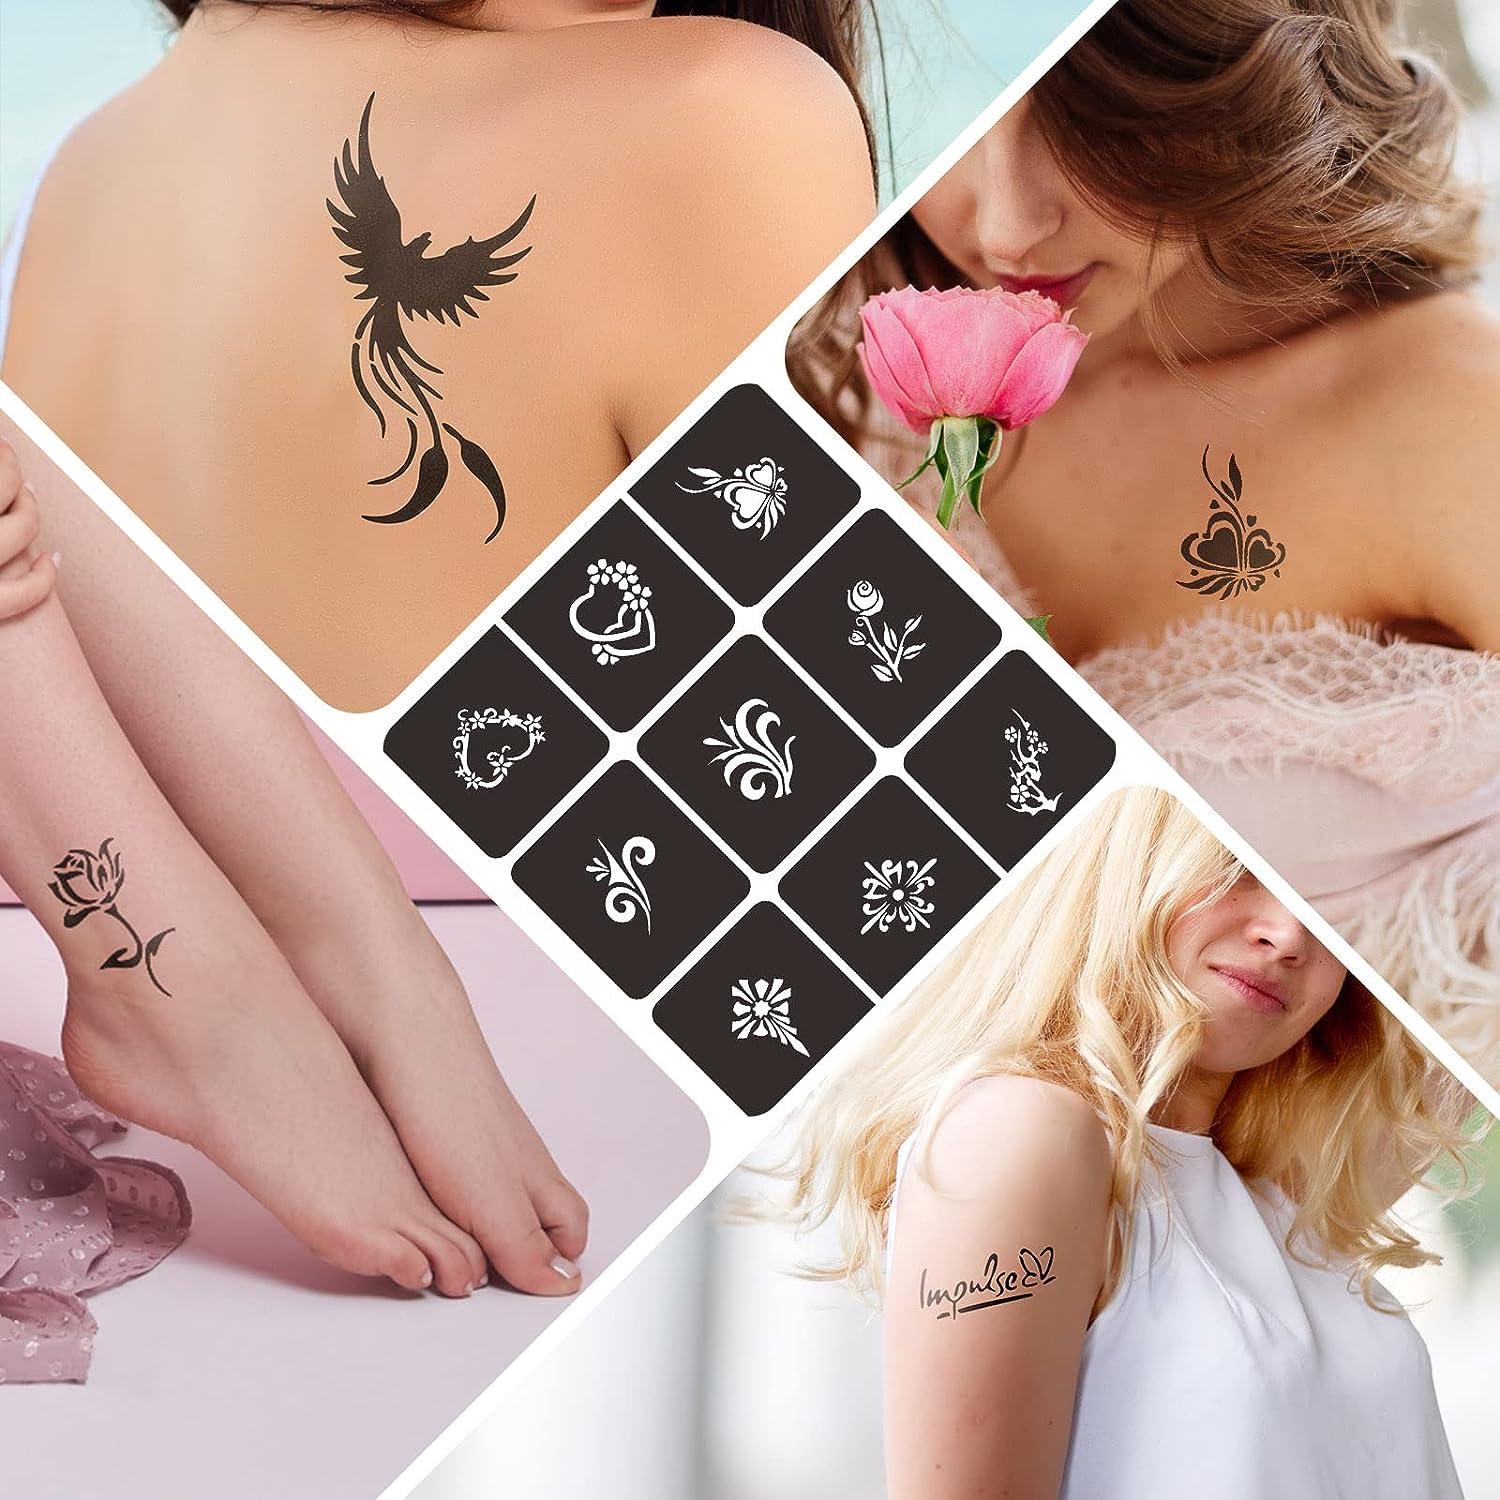 Big Bad Starter Henna Tattoo Kit for Beginning Henna Artists